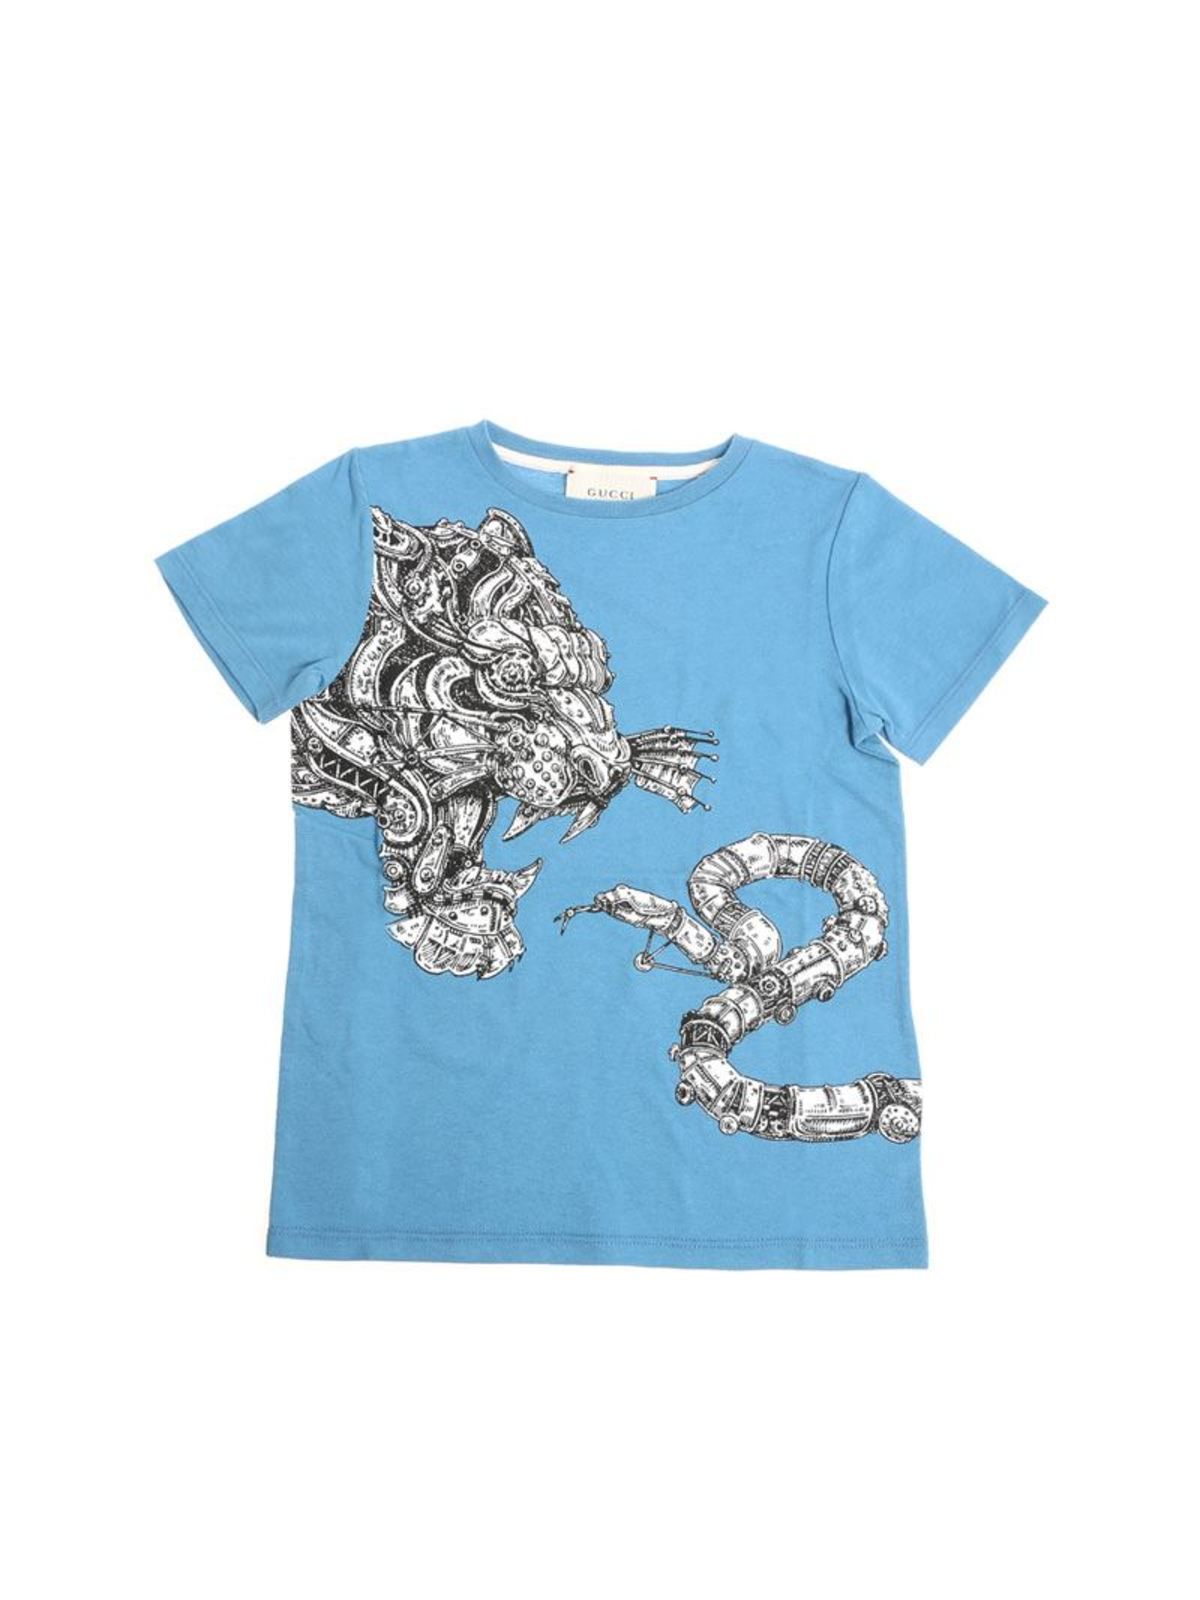 T-shirts Gucci - Tiger and snake print t-shirt - 498013X3I644046